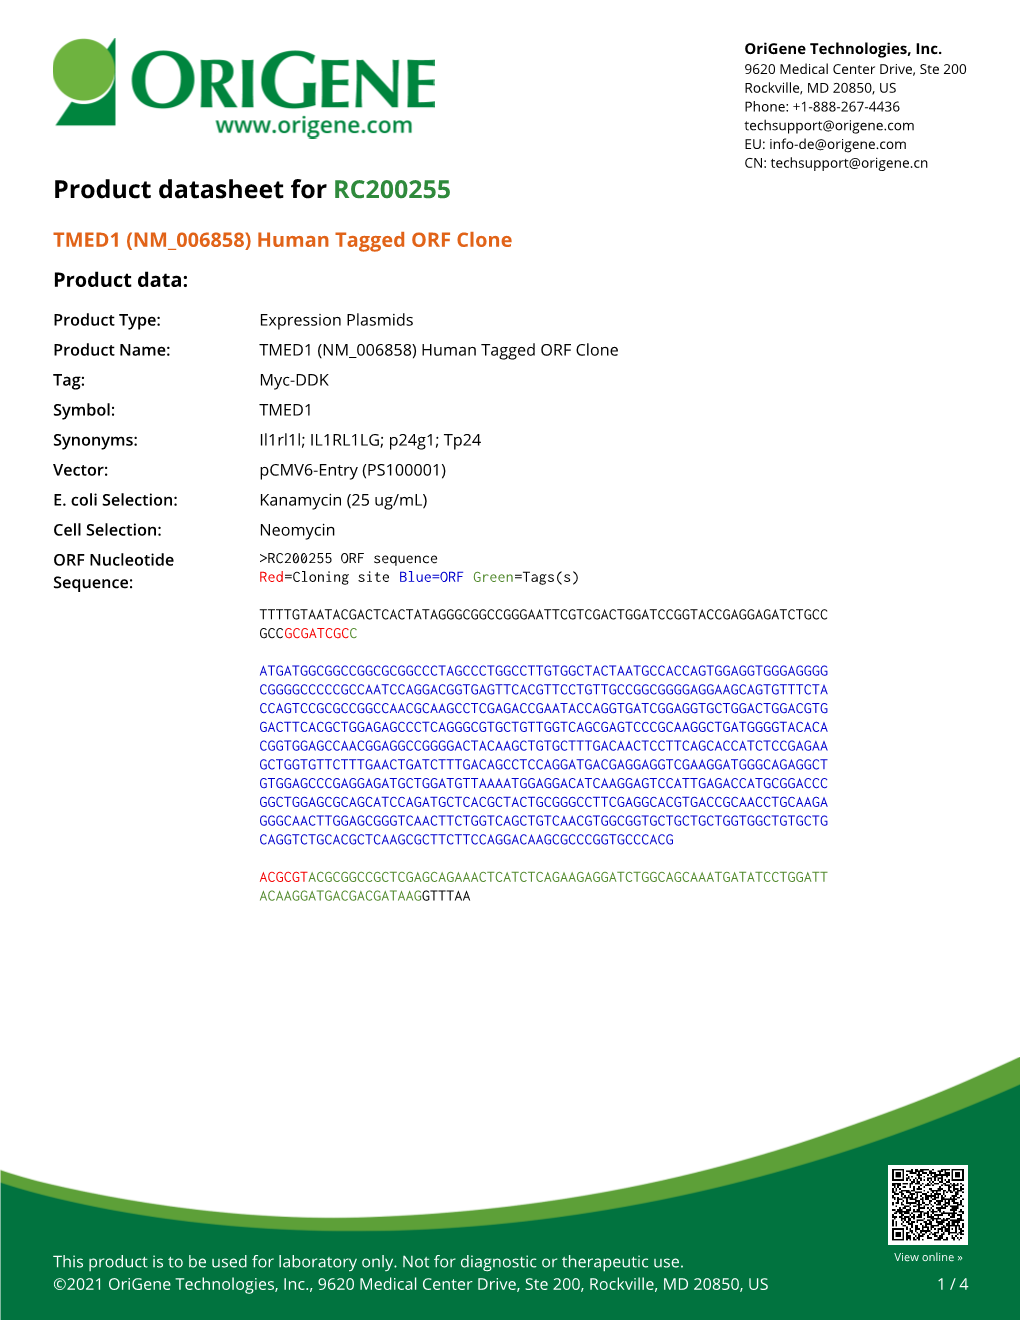 TMED1 (NM 006858) Human Tagged ORF Clone – RC200255